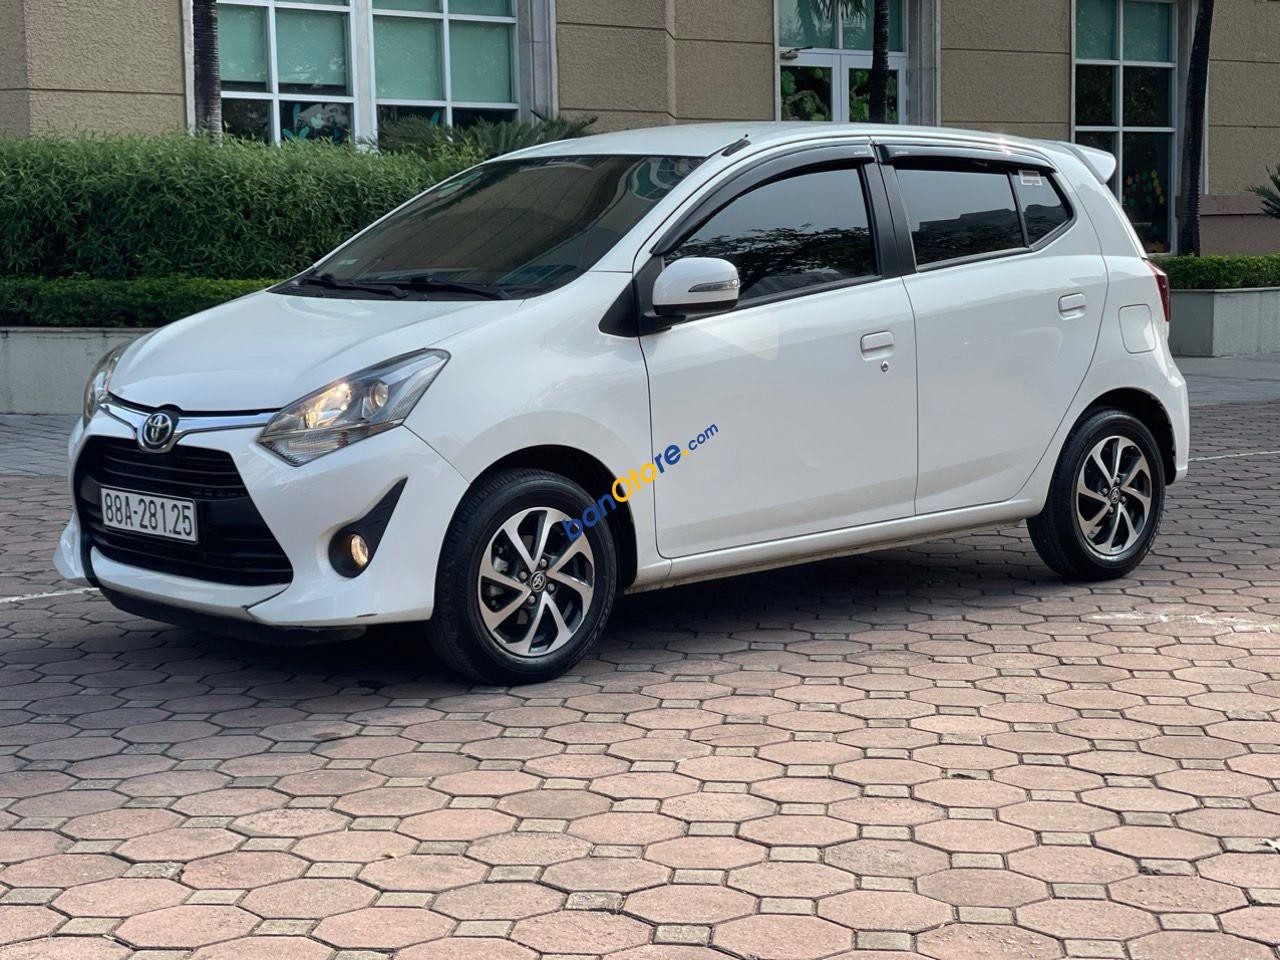 Toyota Wigo 2019 - Cần bán xe đẹp bình dân